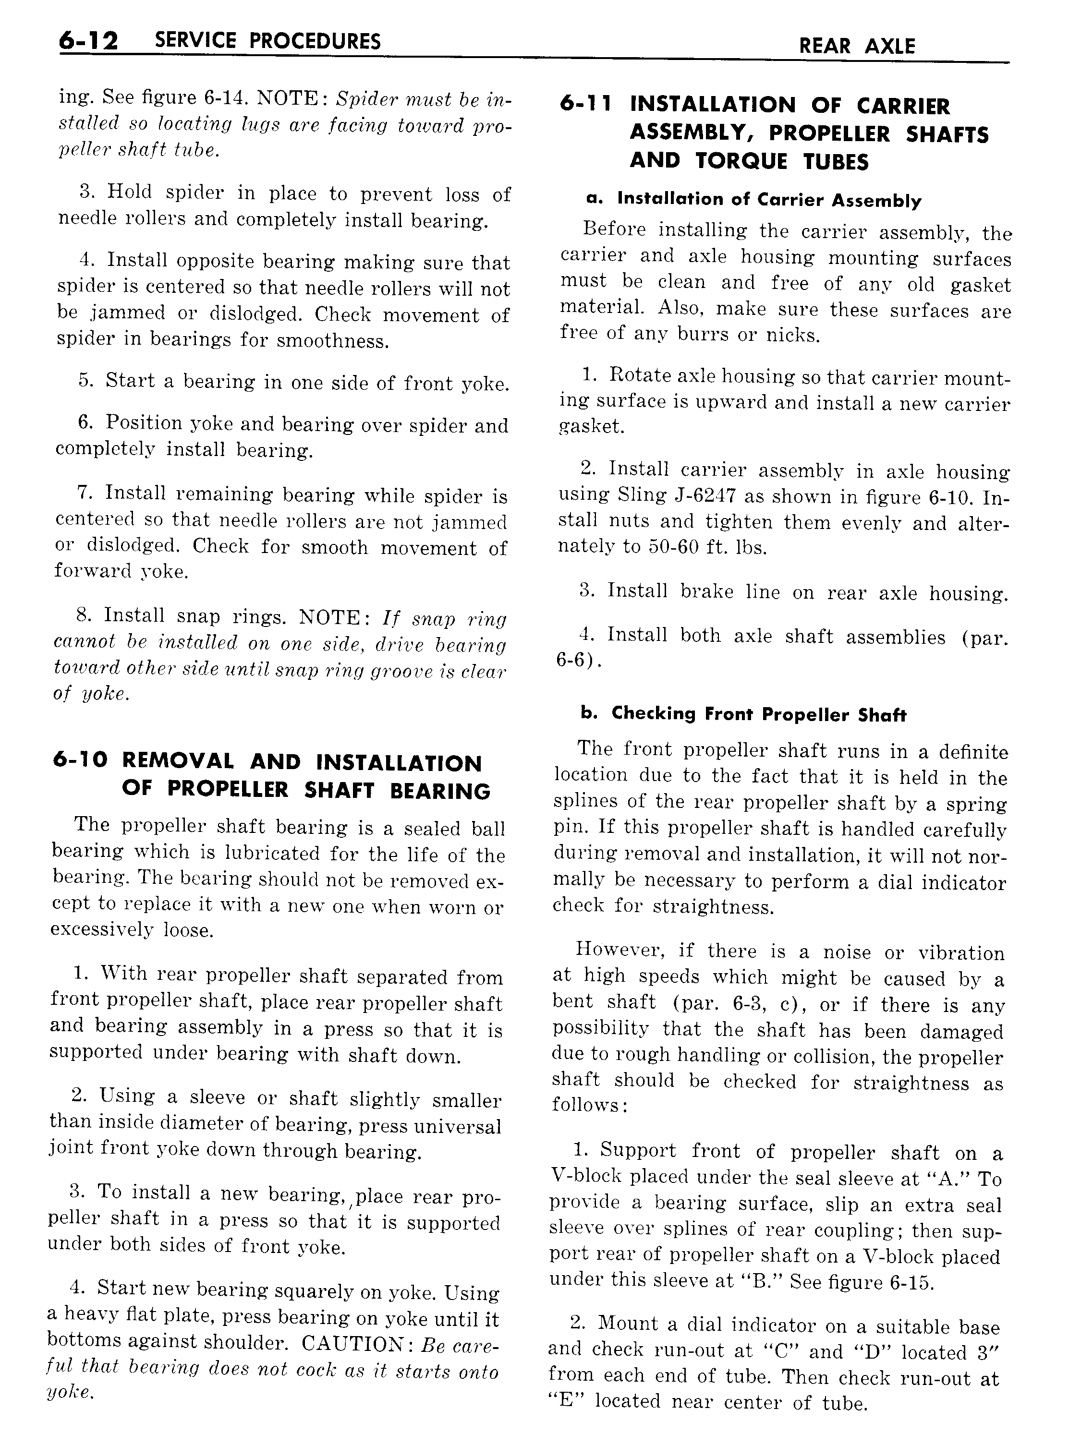 n_07 1957 Buick Shop Manual - Rear Axle-012-012.jpg